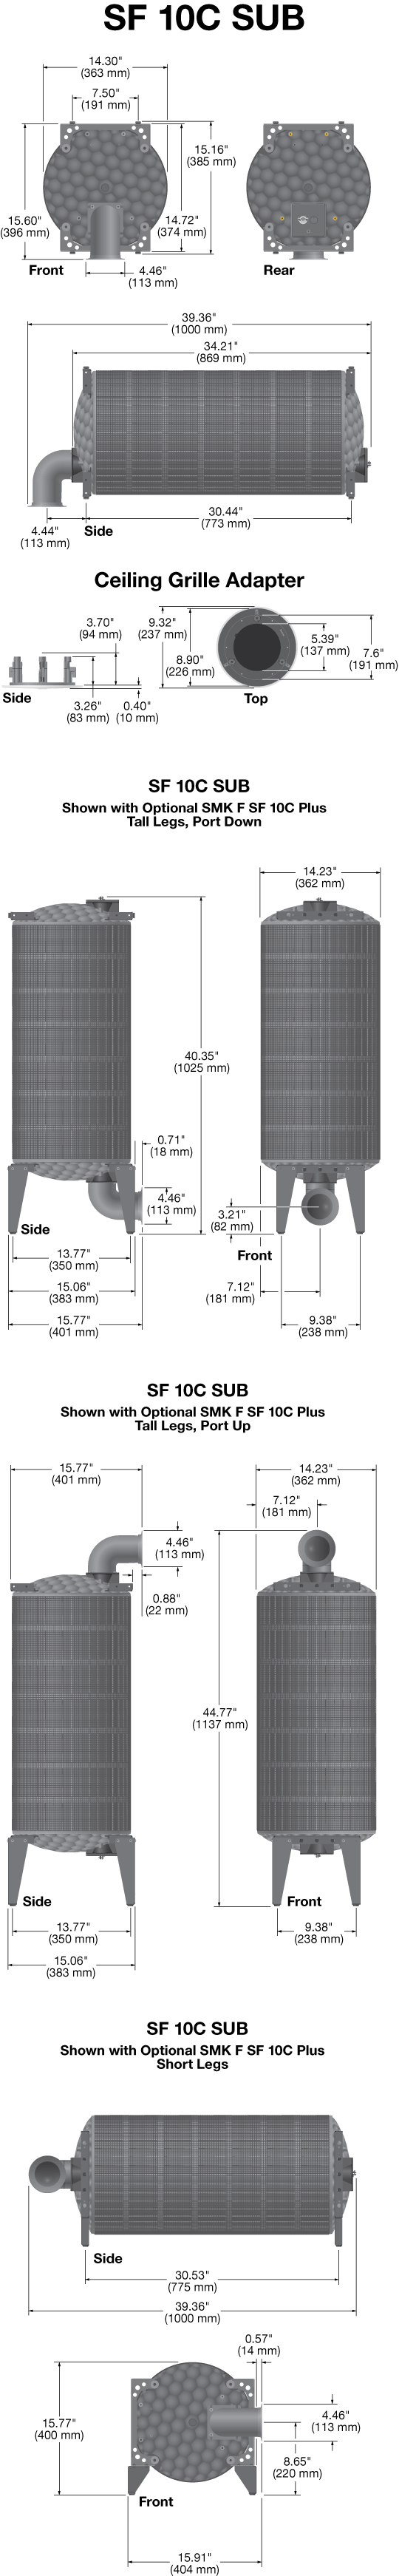 SF 10C SUB Panel Drawing